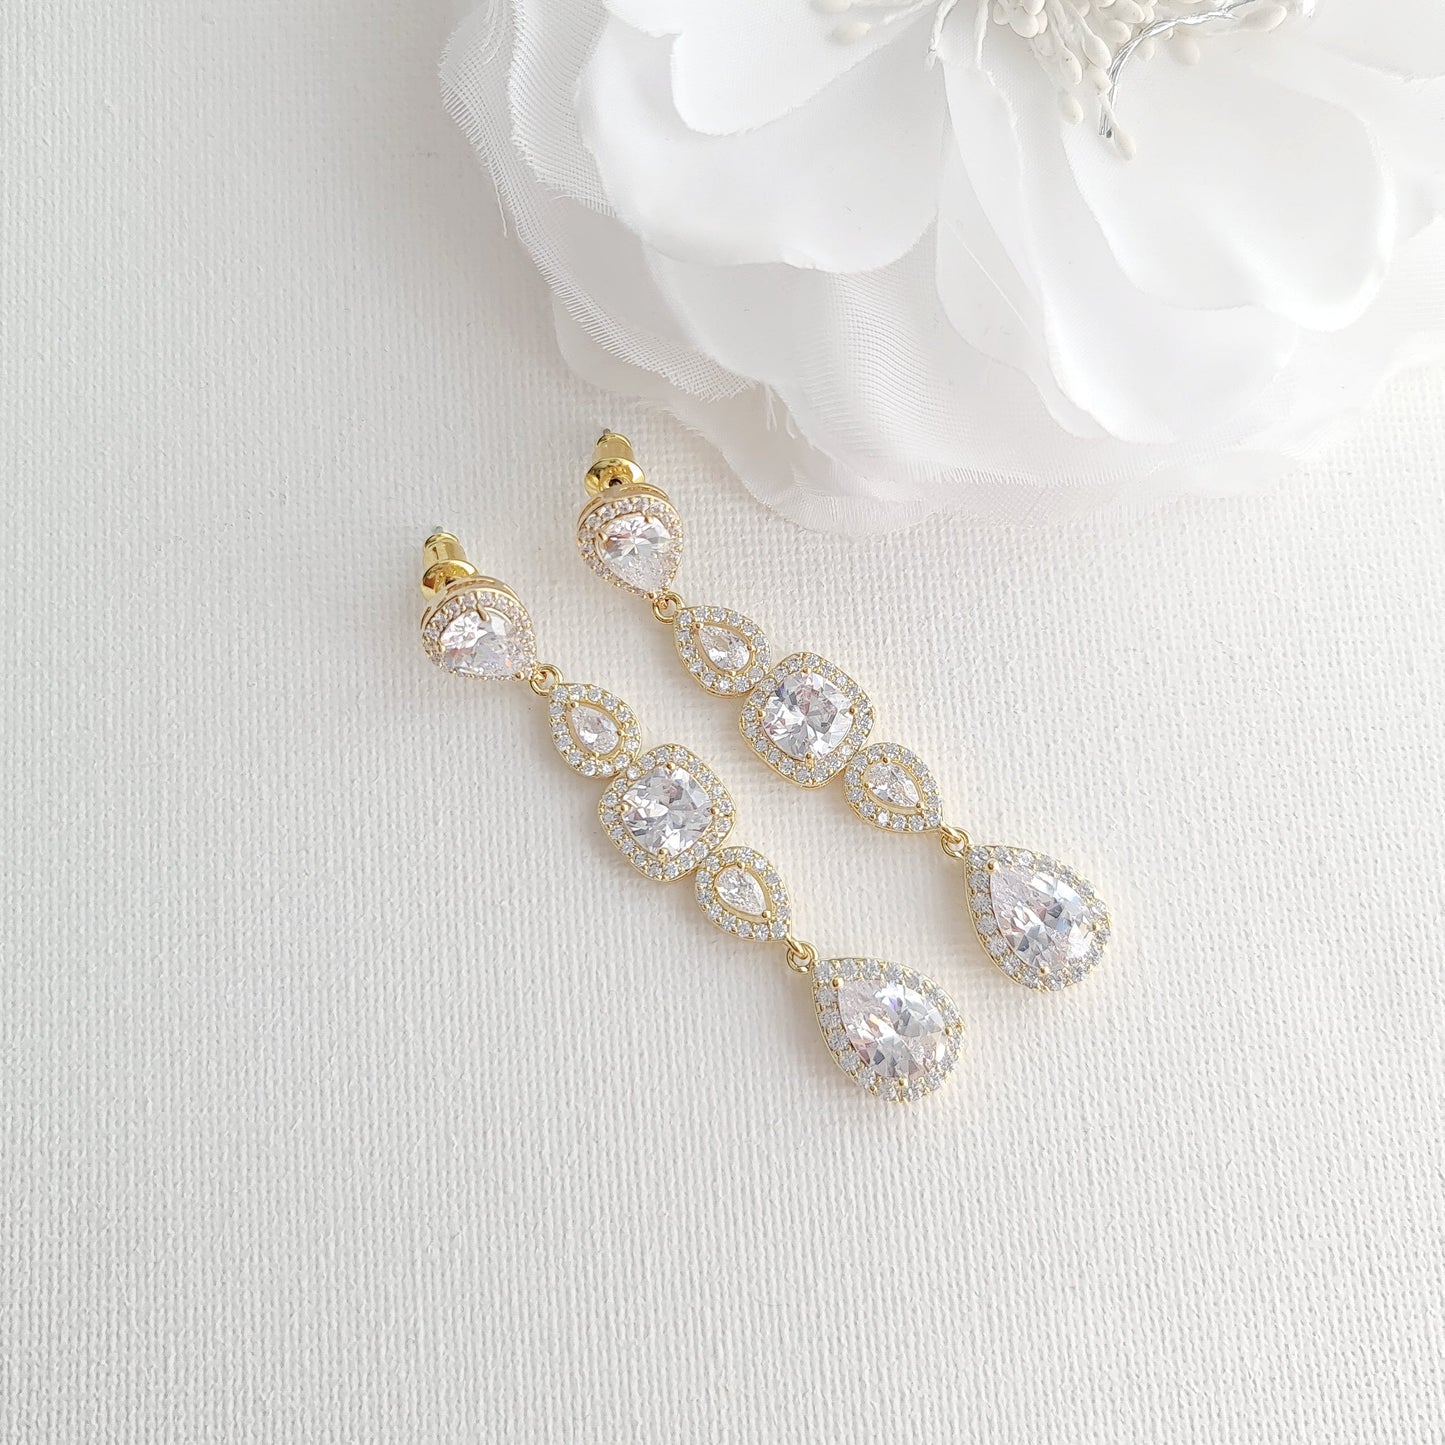 Rose Gold Drop Earrings Necklace Bracelet Set-Gianna